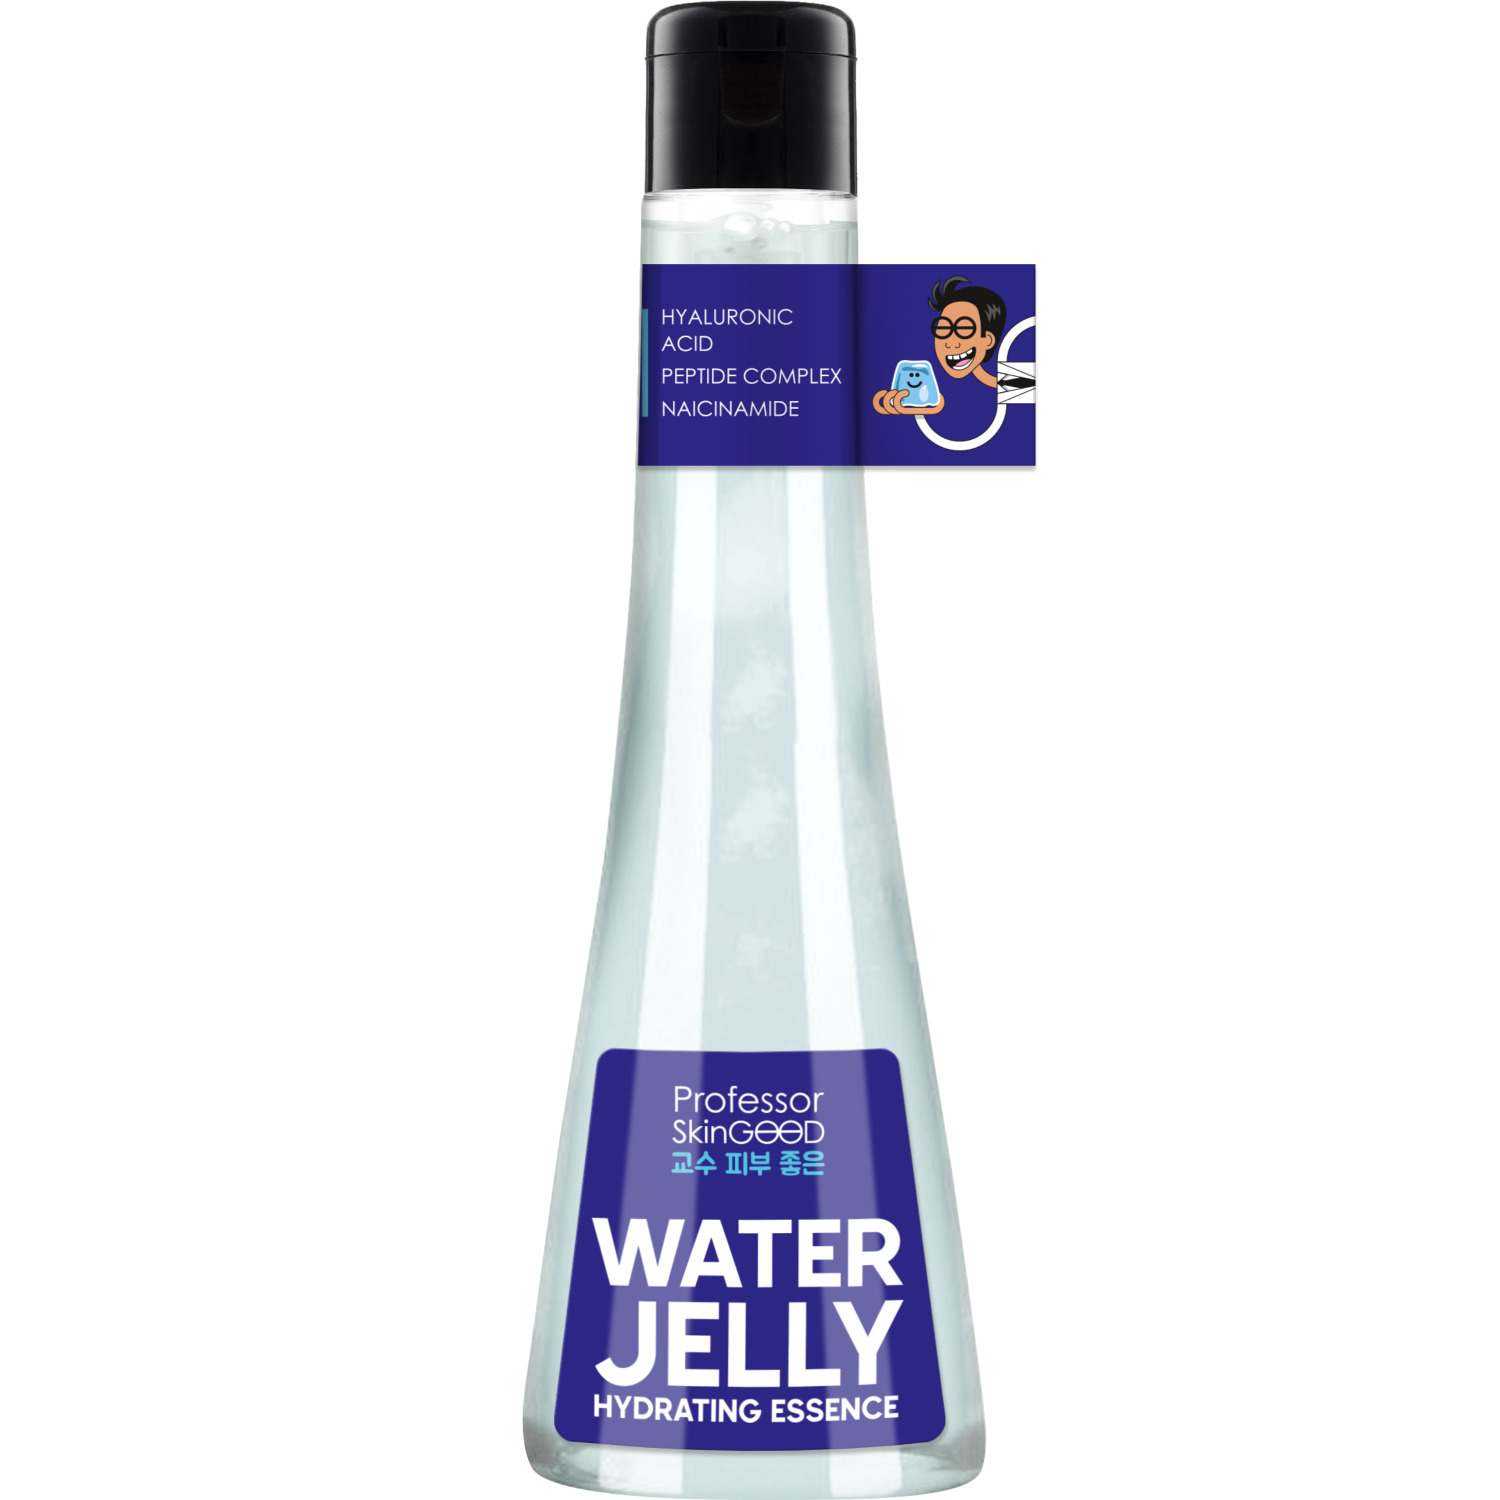 Professor SkinGOOD Увлажняющая эссенция с гиалуроновой кислотой Water Jelly Hydrating Essence, желе, 125 мл (Professor SkinGOOD, Уход)